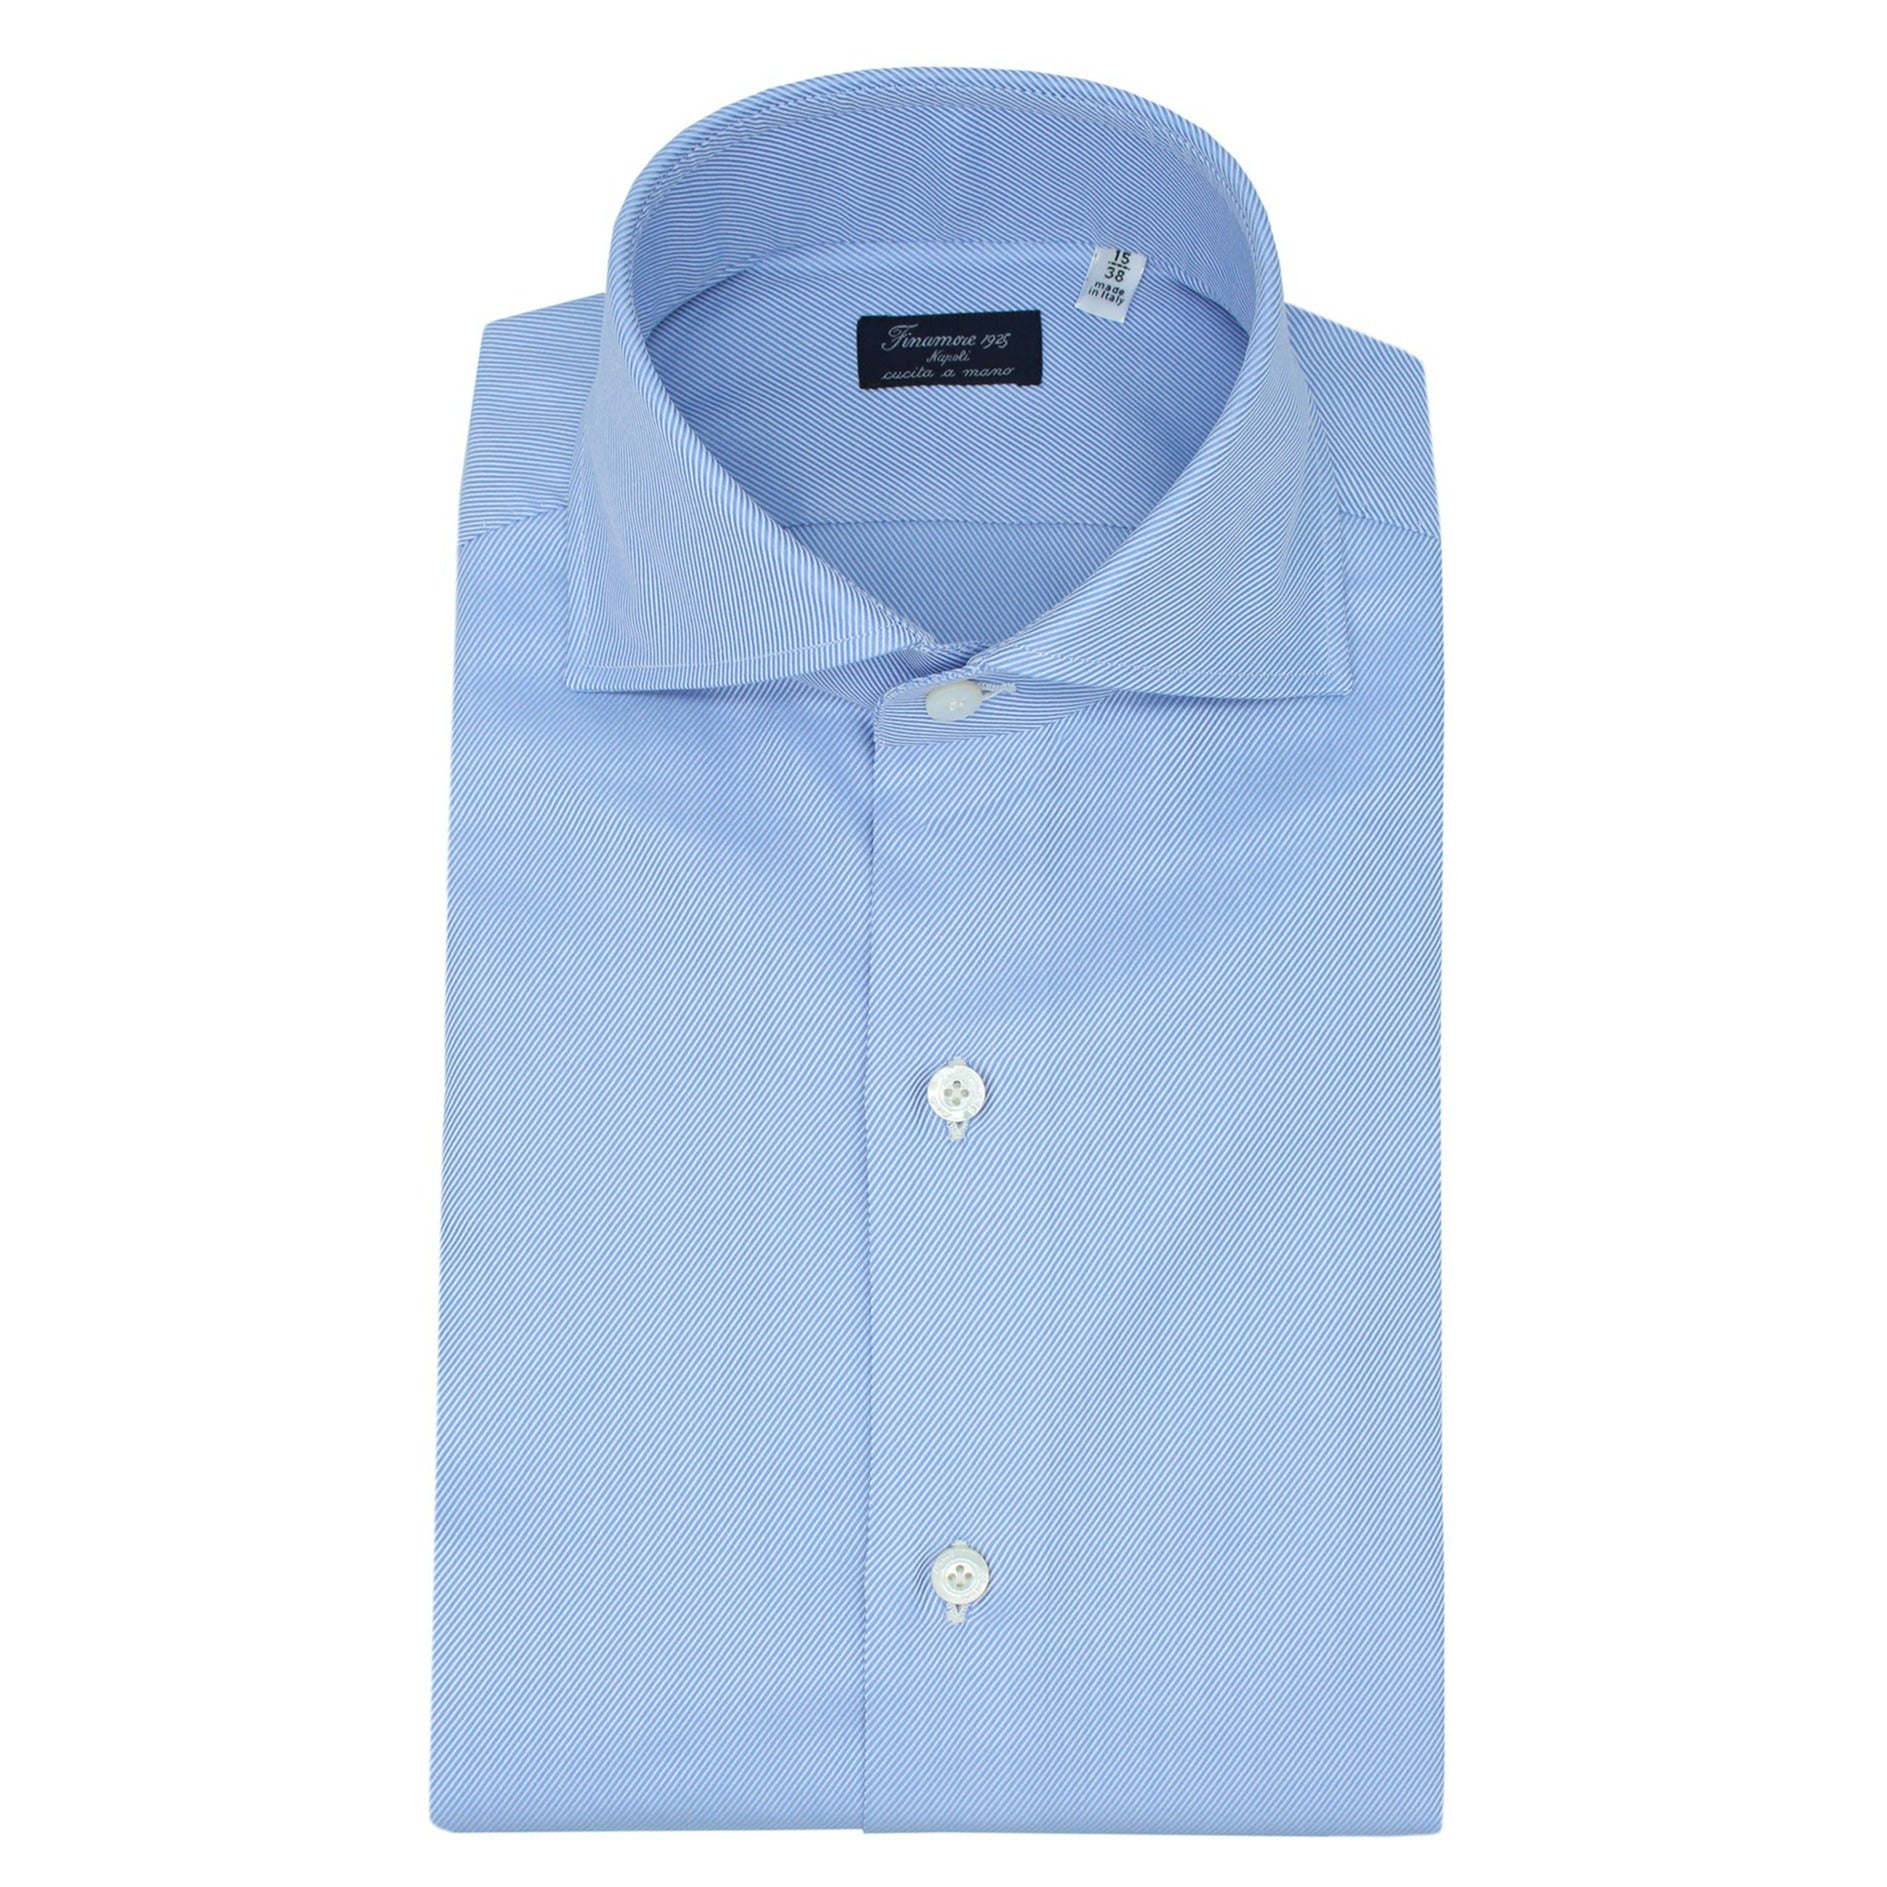 Naples shirt classic fit Twill micro light blue stripe